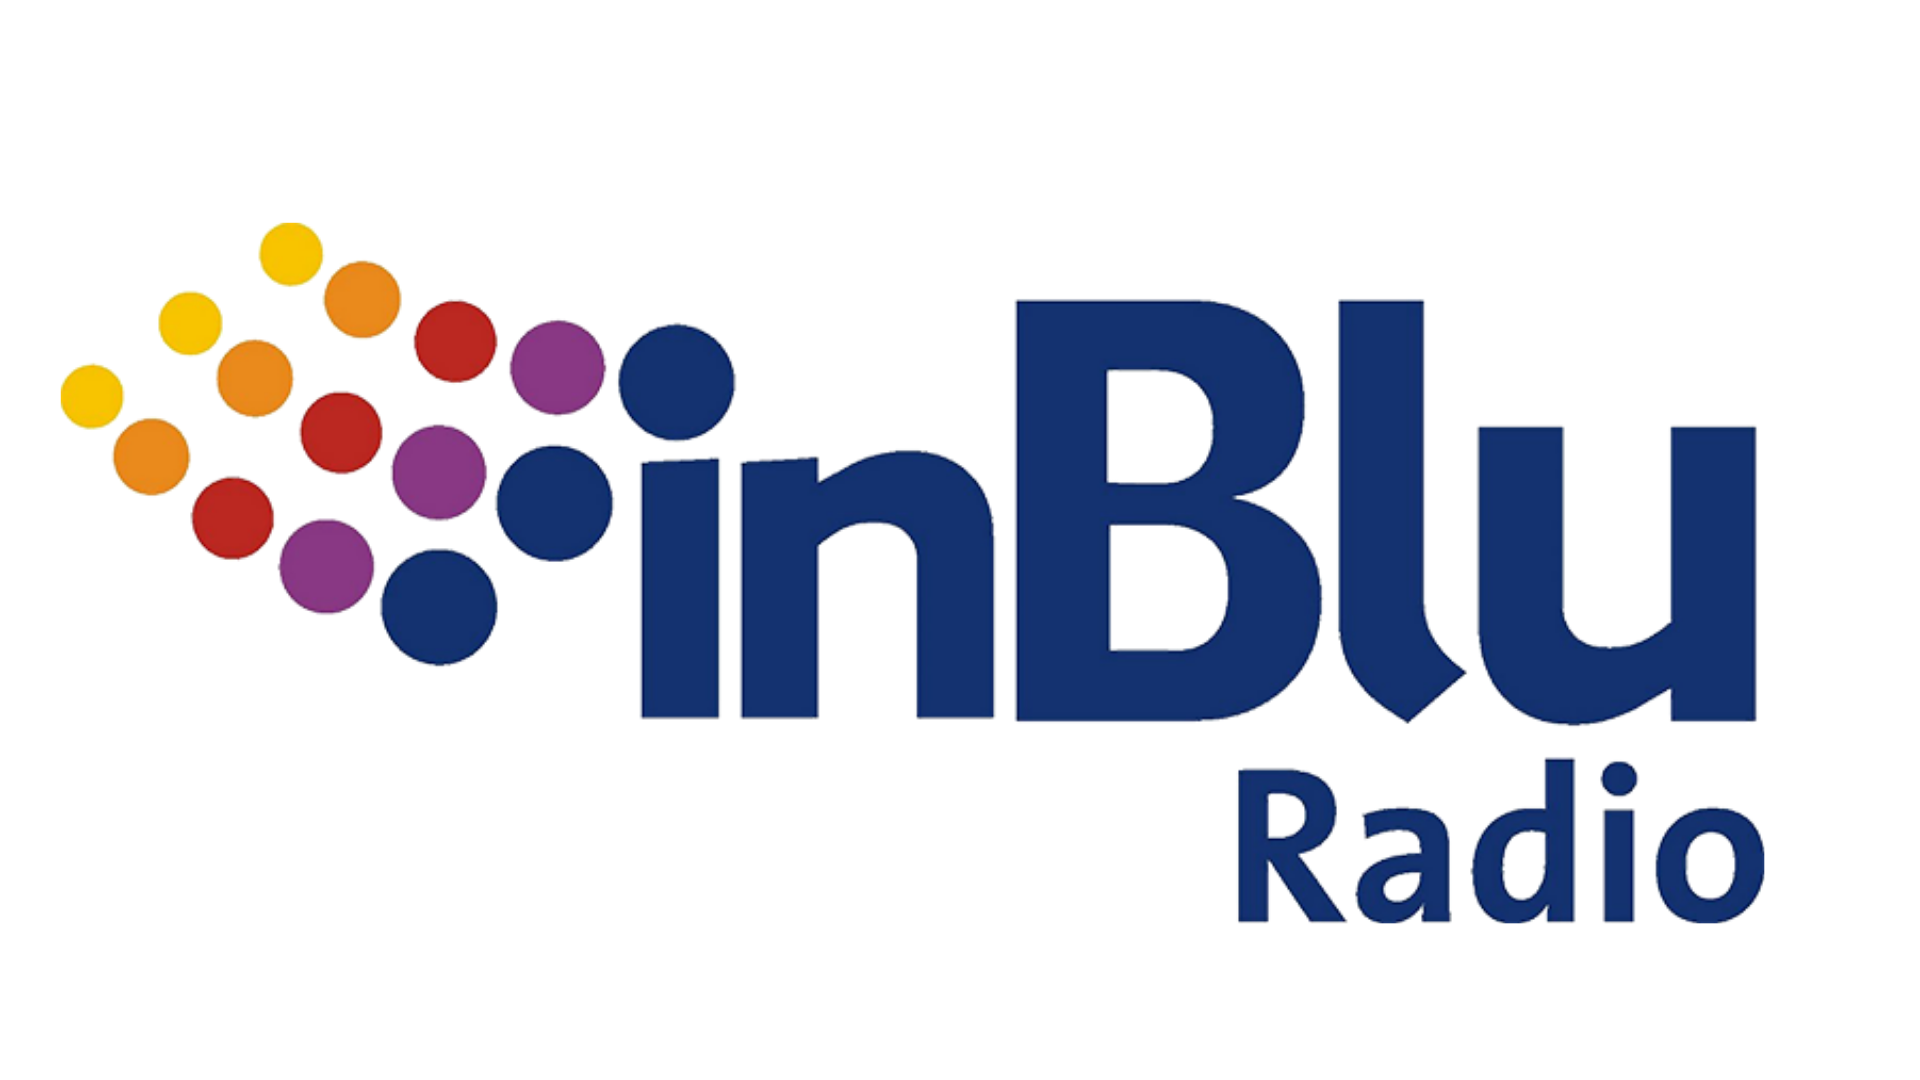 Radio in Blu